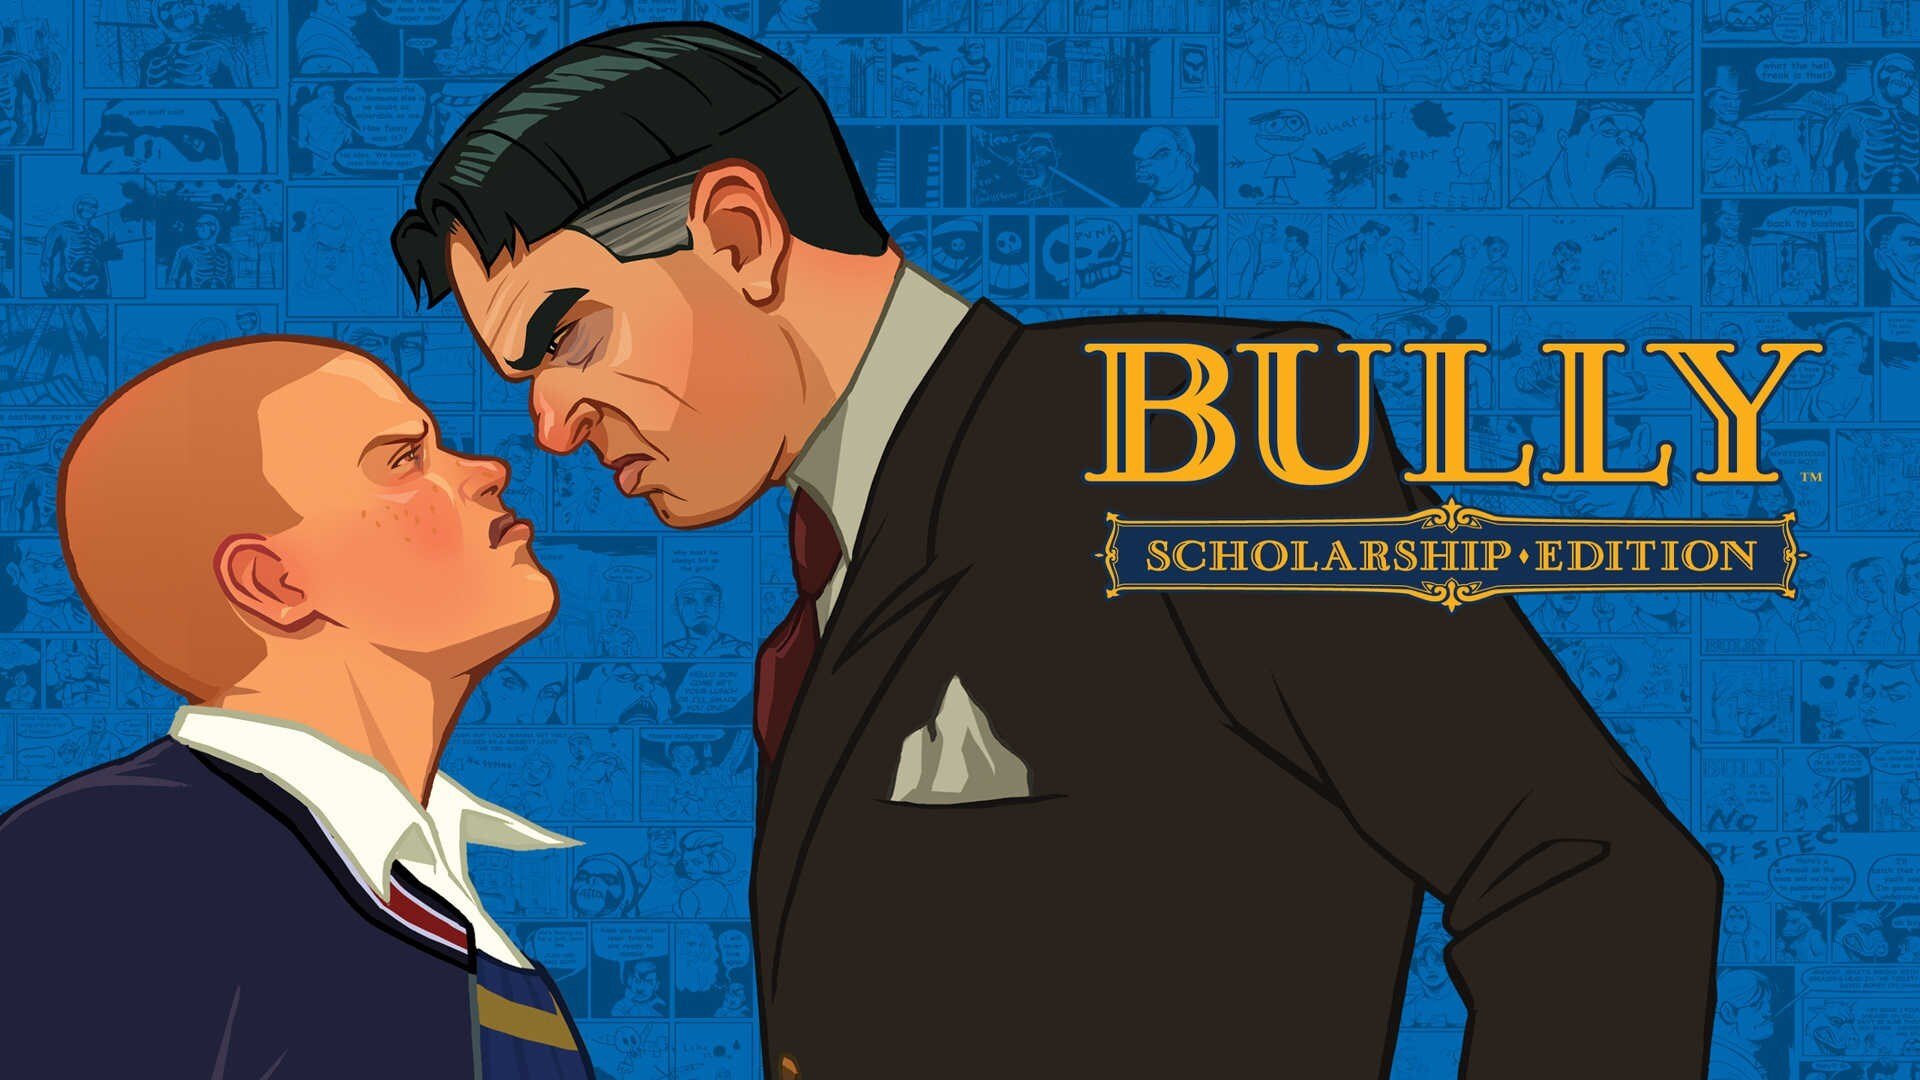 Bully scholarship edition